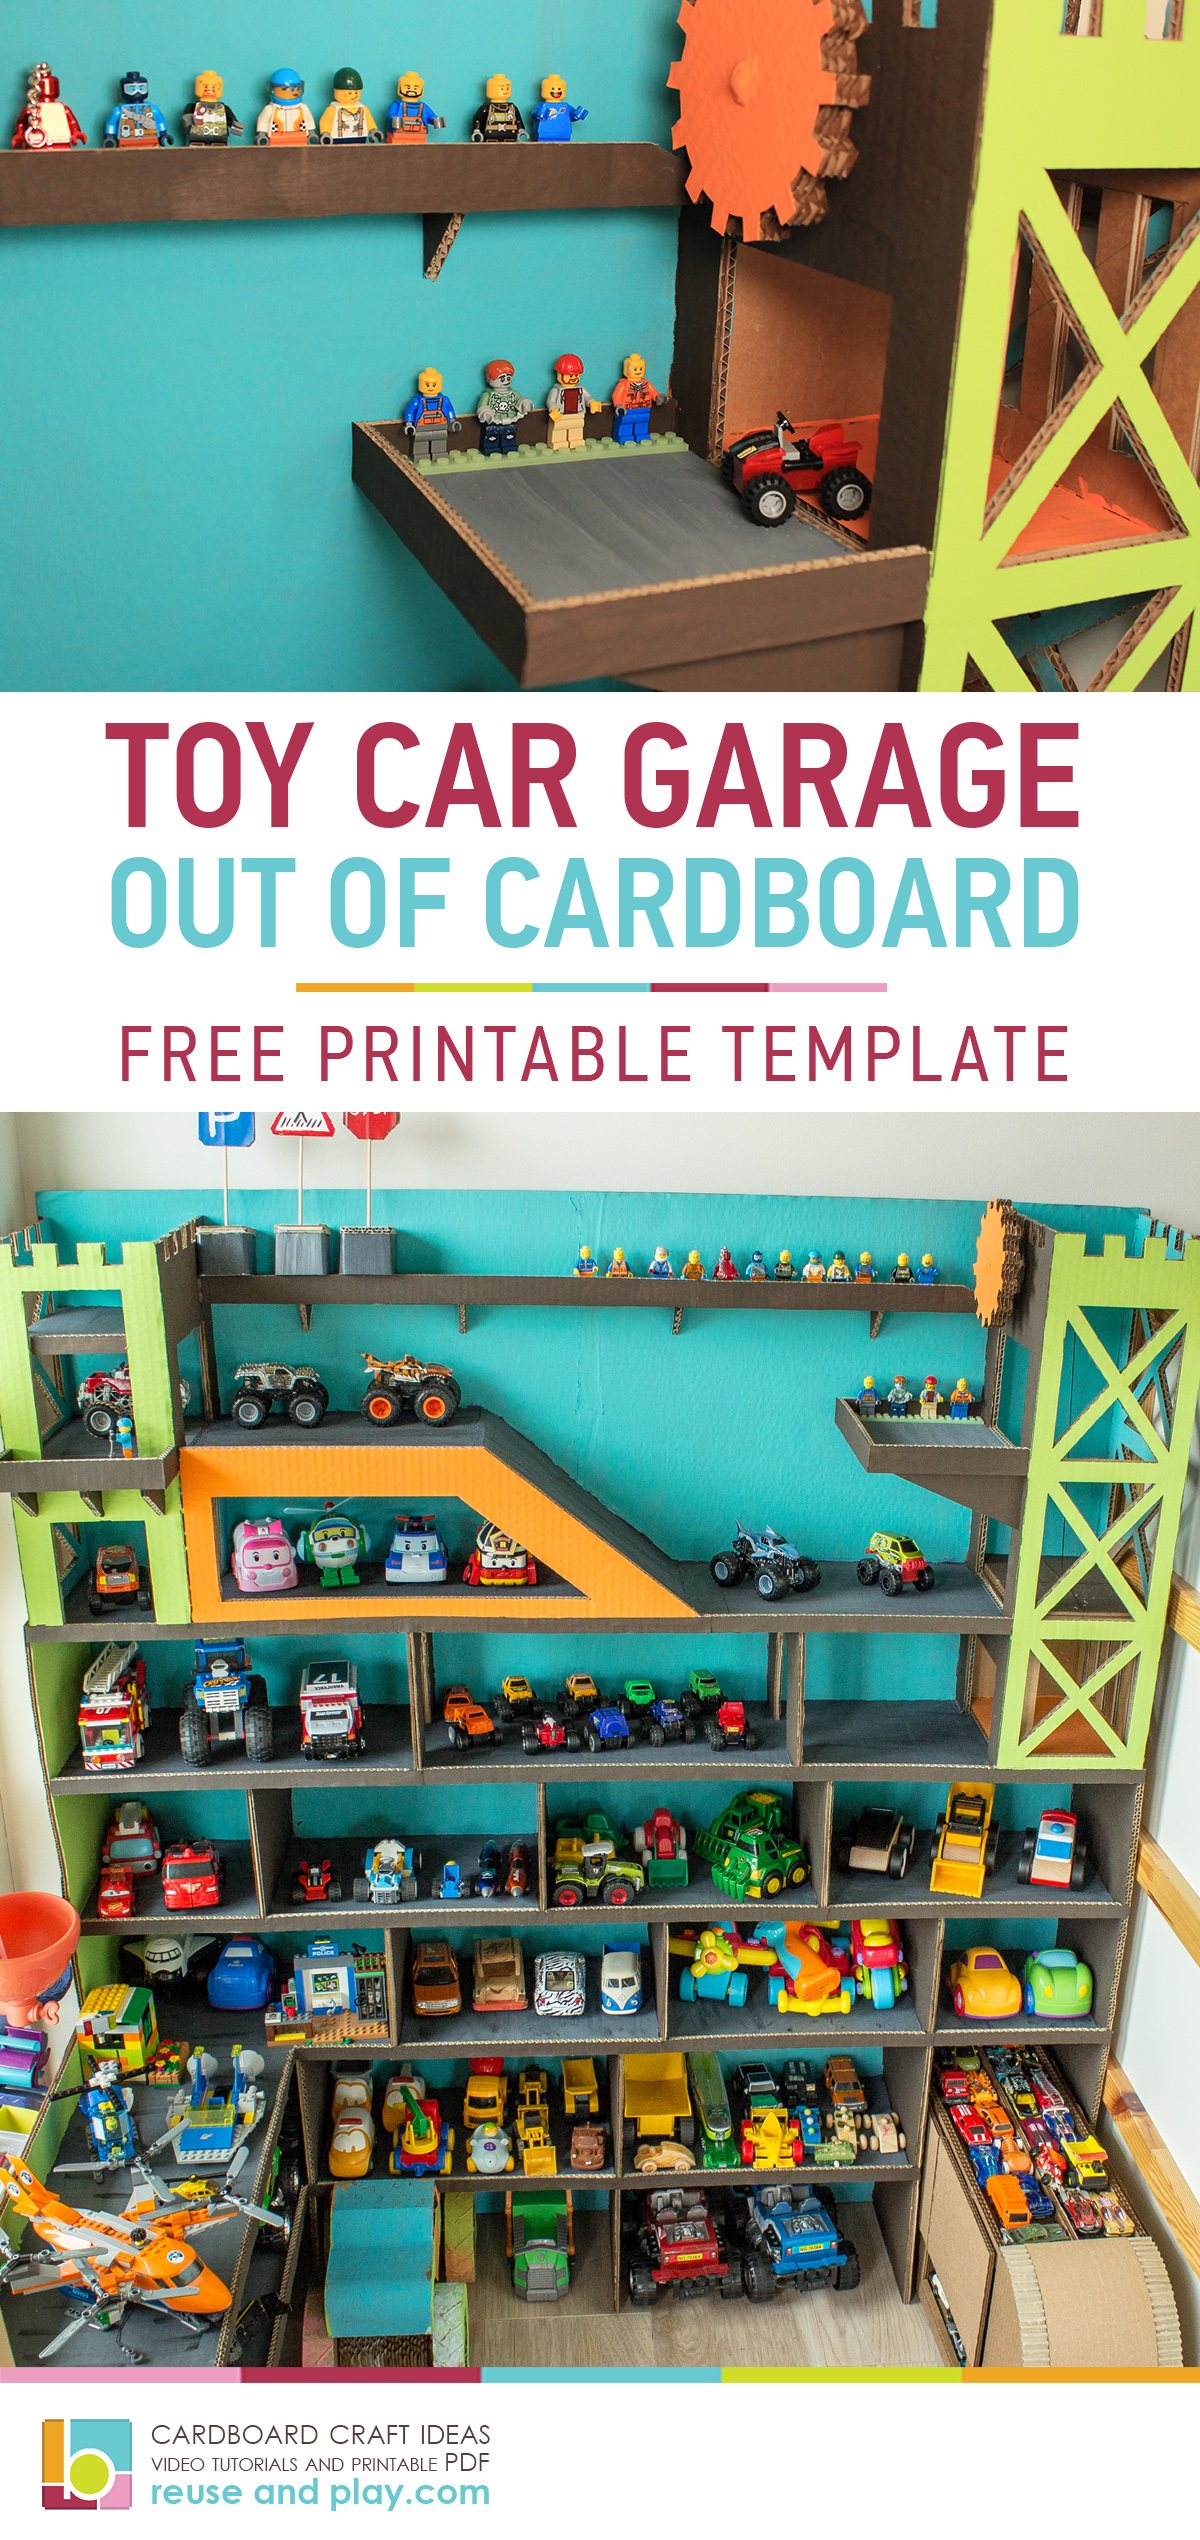 Cardboard Tool Kit, Construction Toys, DIY Crafts